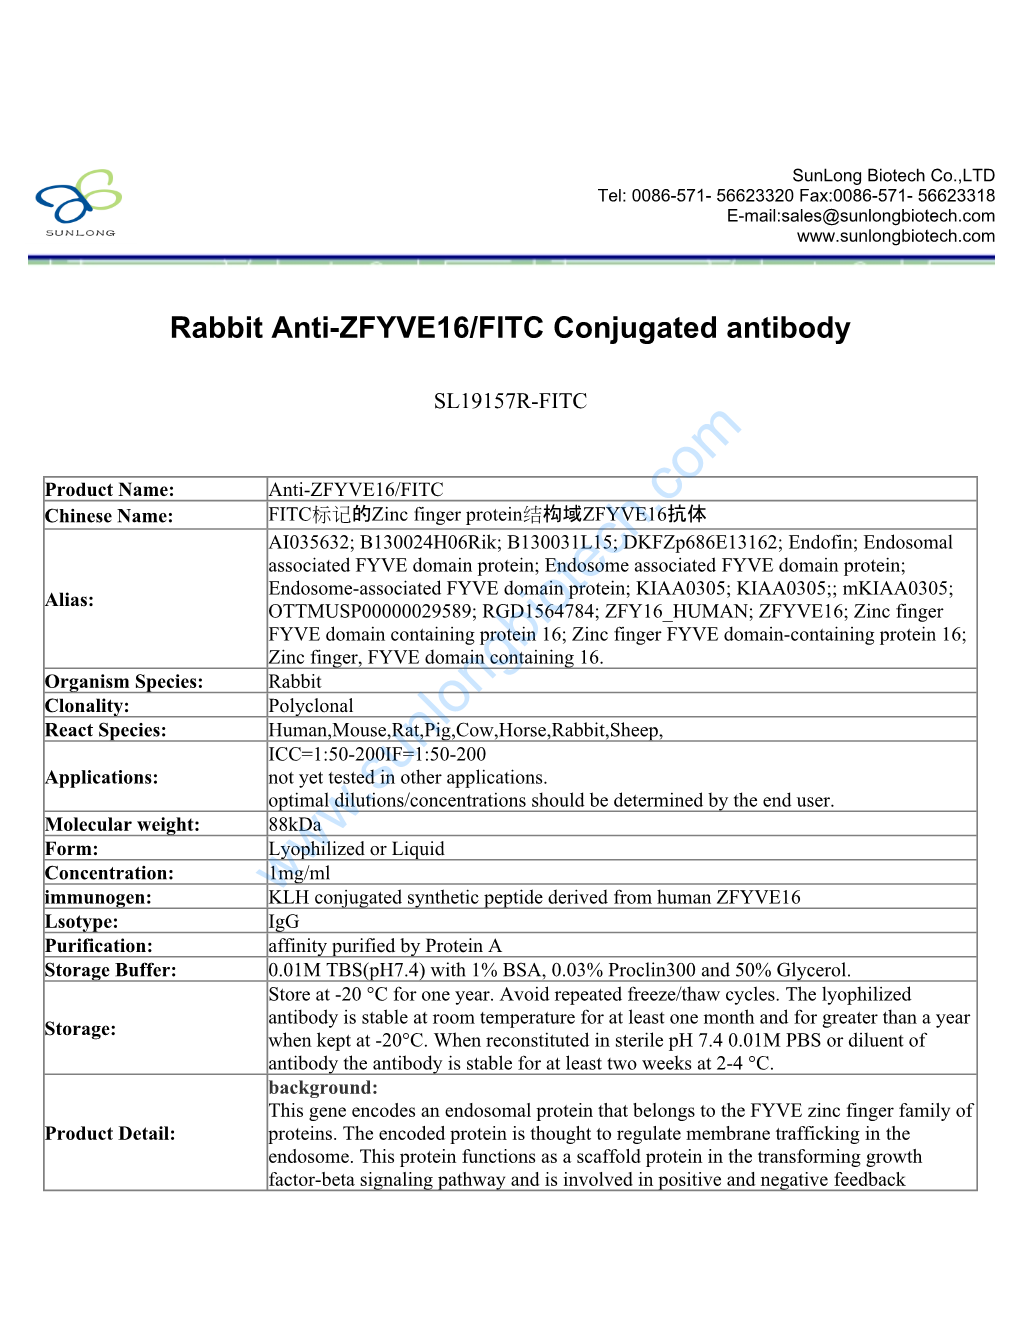 Rabbit Anti-ZFYVE16/FITC Conjugated Antibody